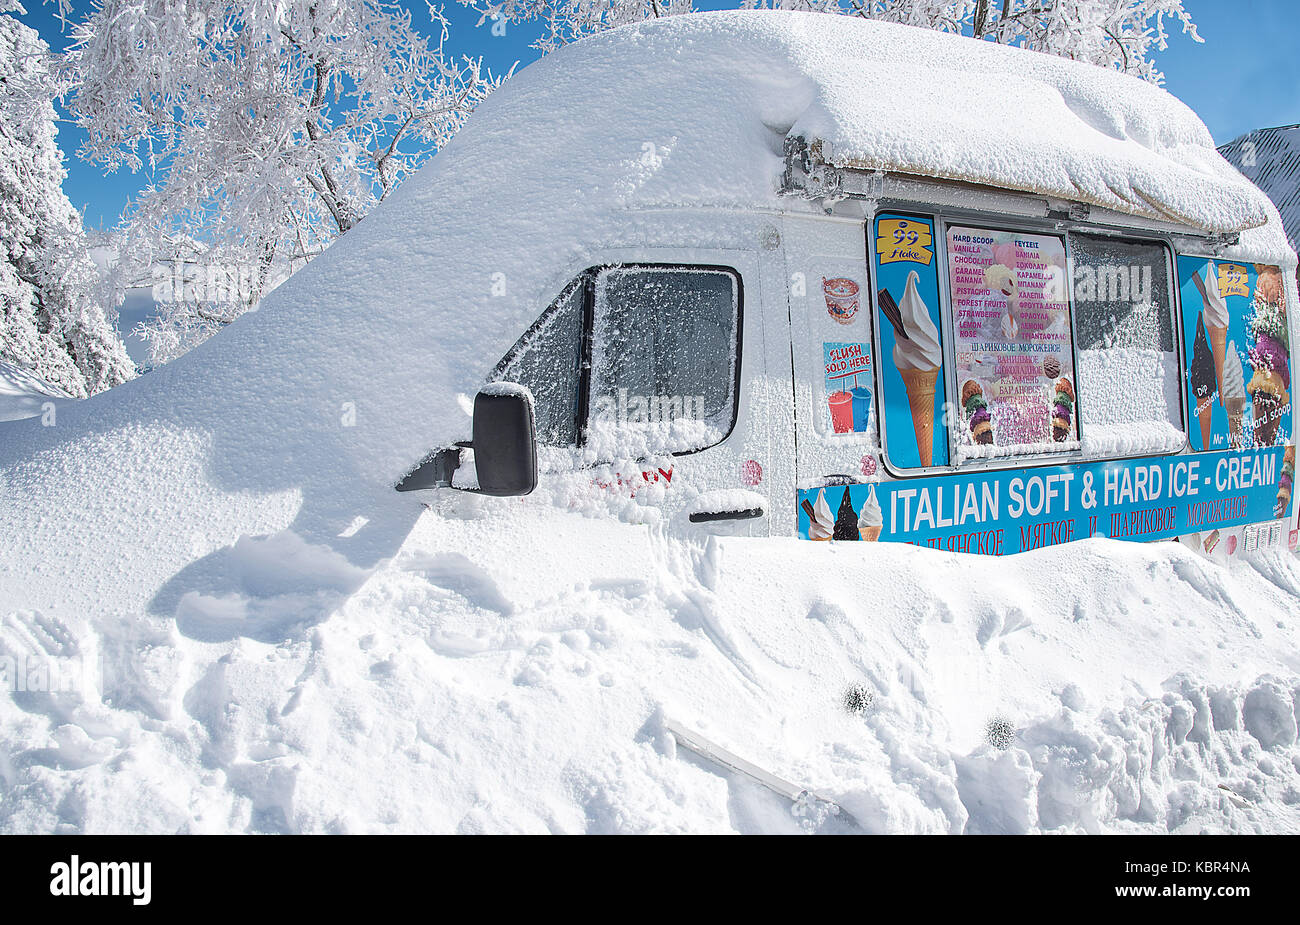 Ice Cream van im Winter Schnee. Troodos-gebirge, Zypern Stockfoto